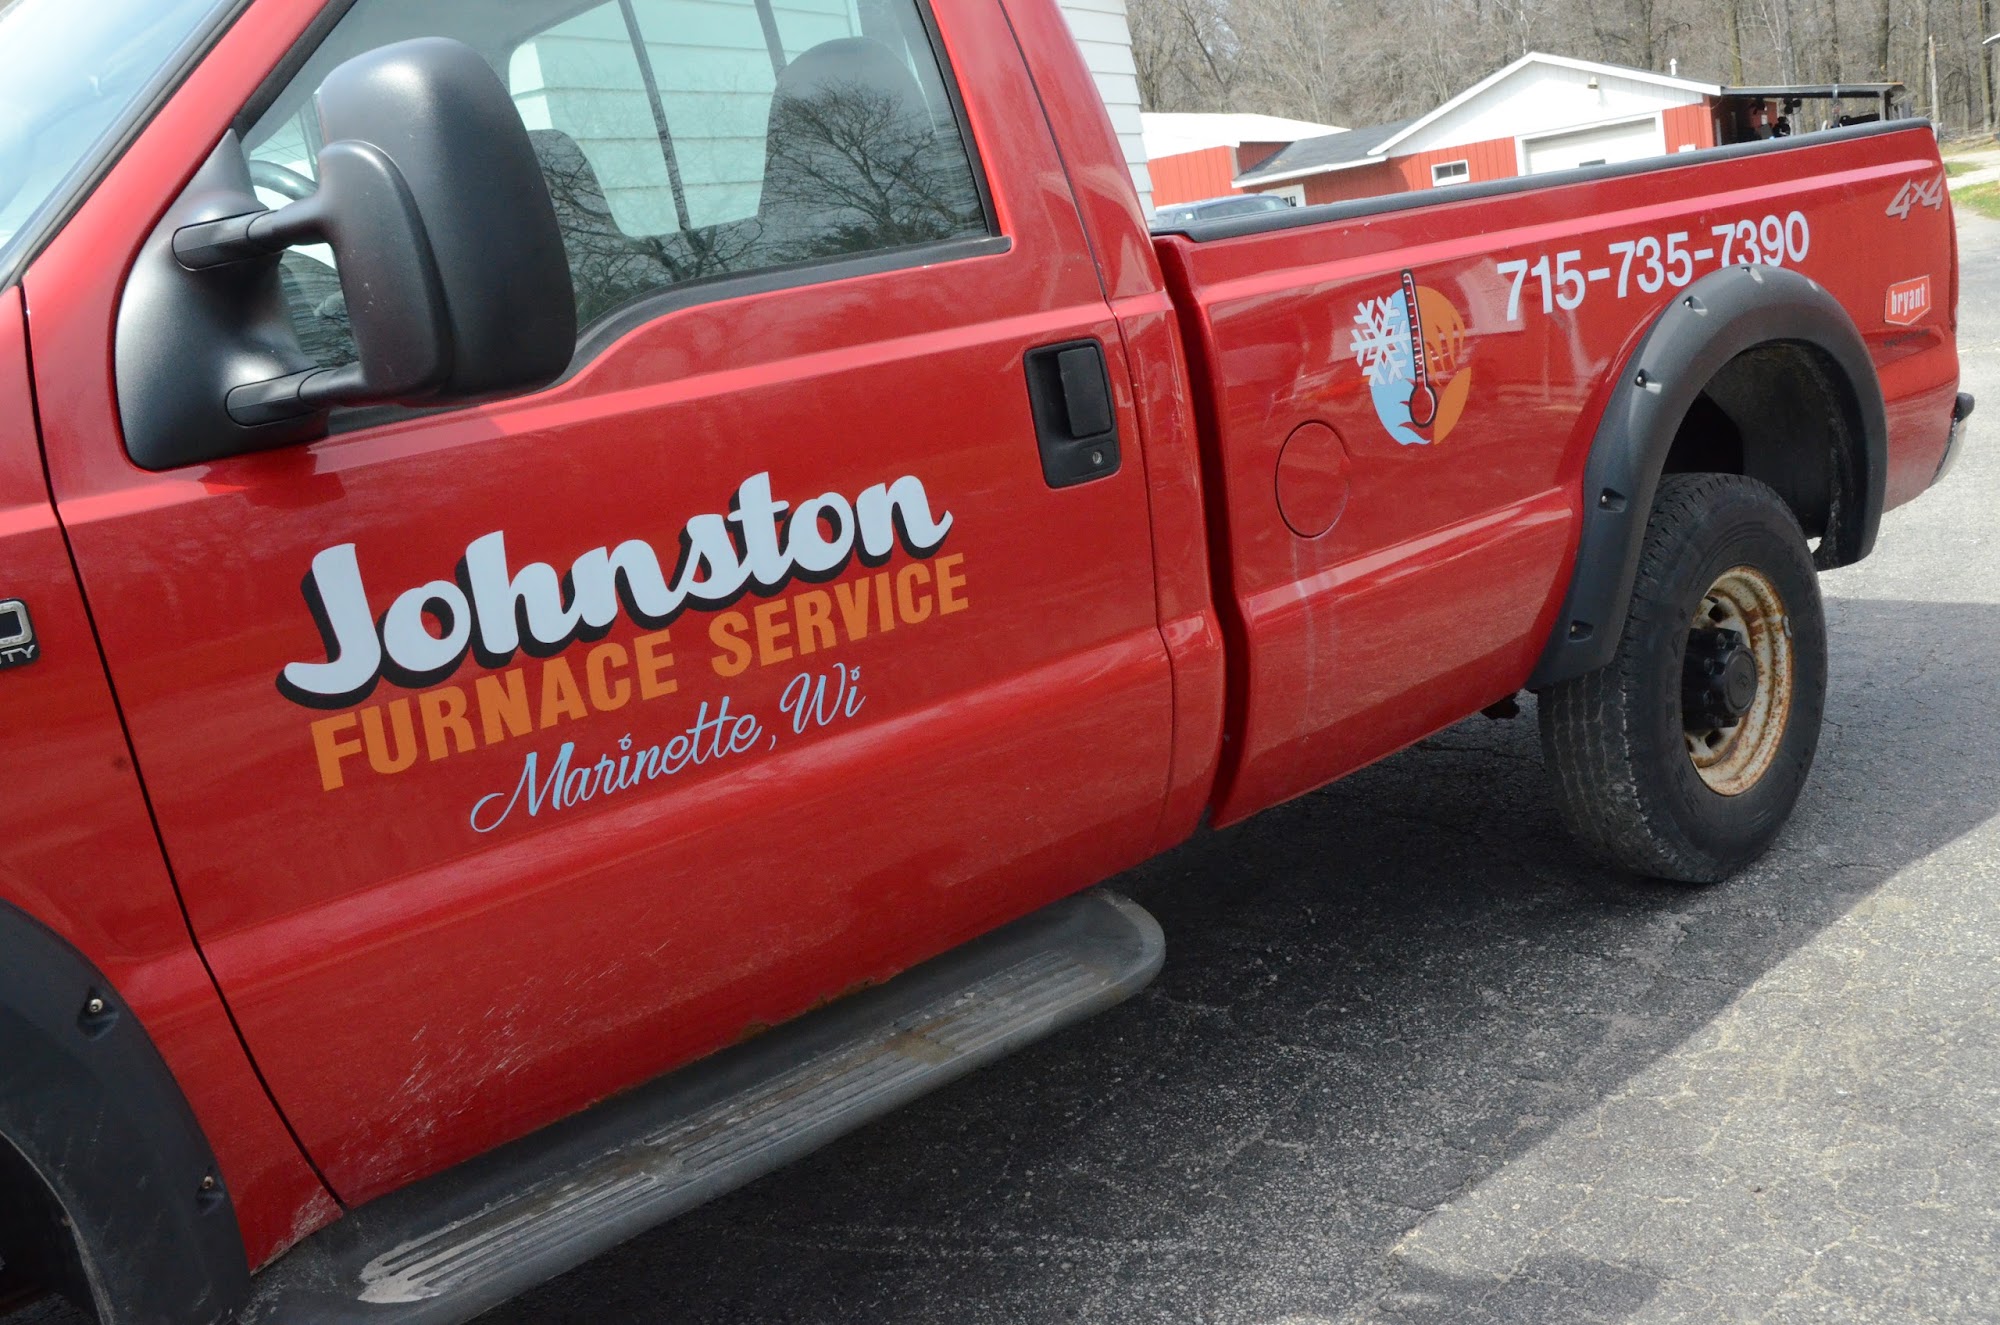 Johnston Furnace Service Corporation